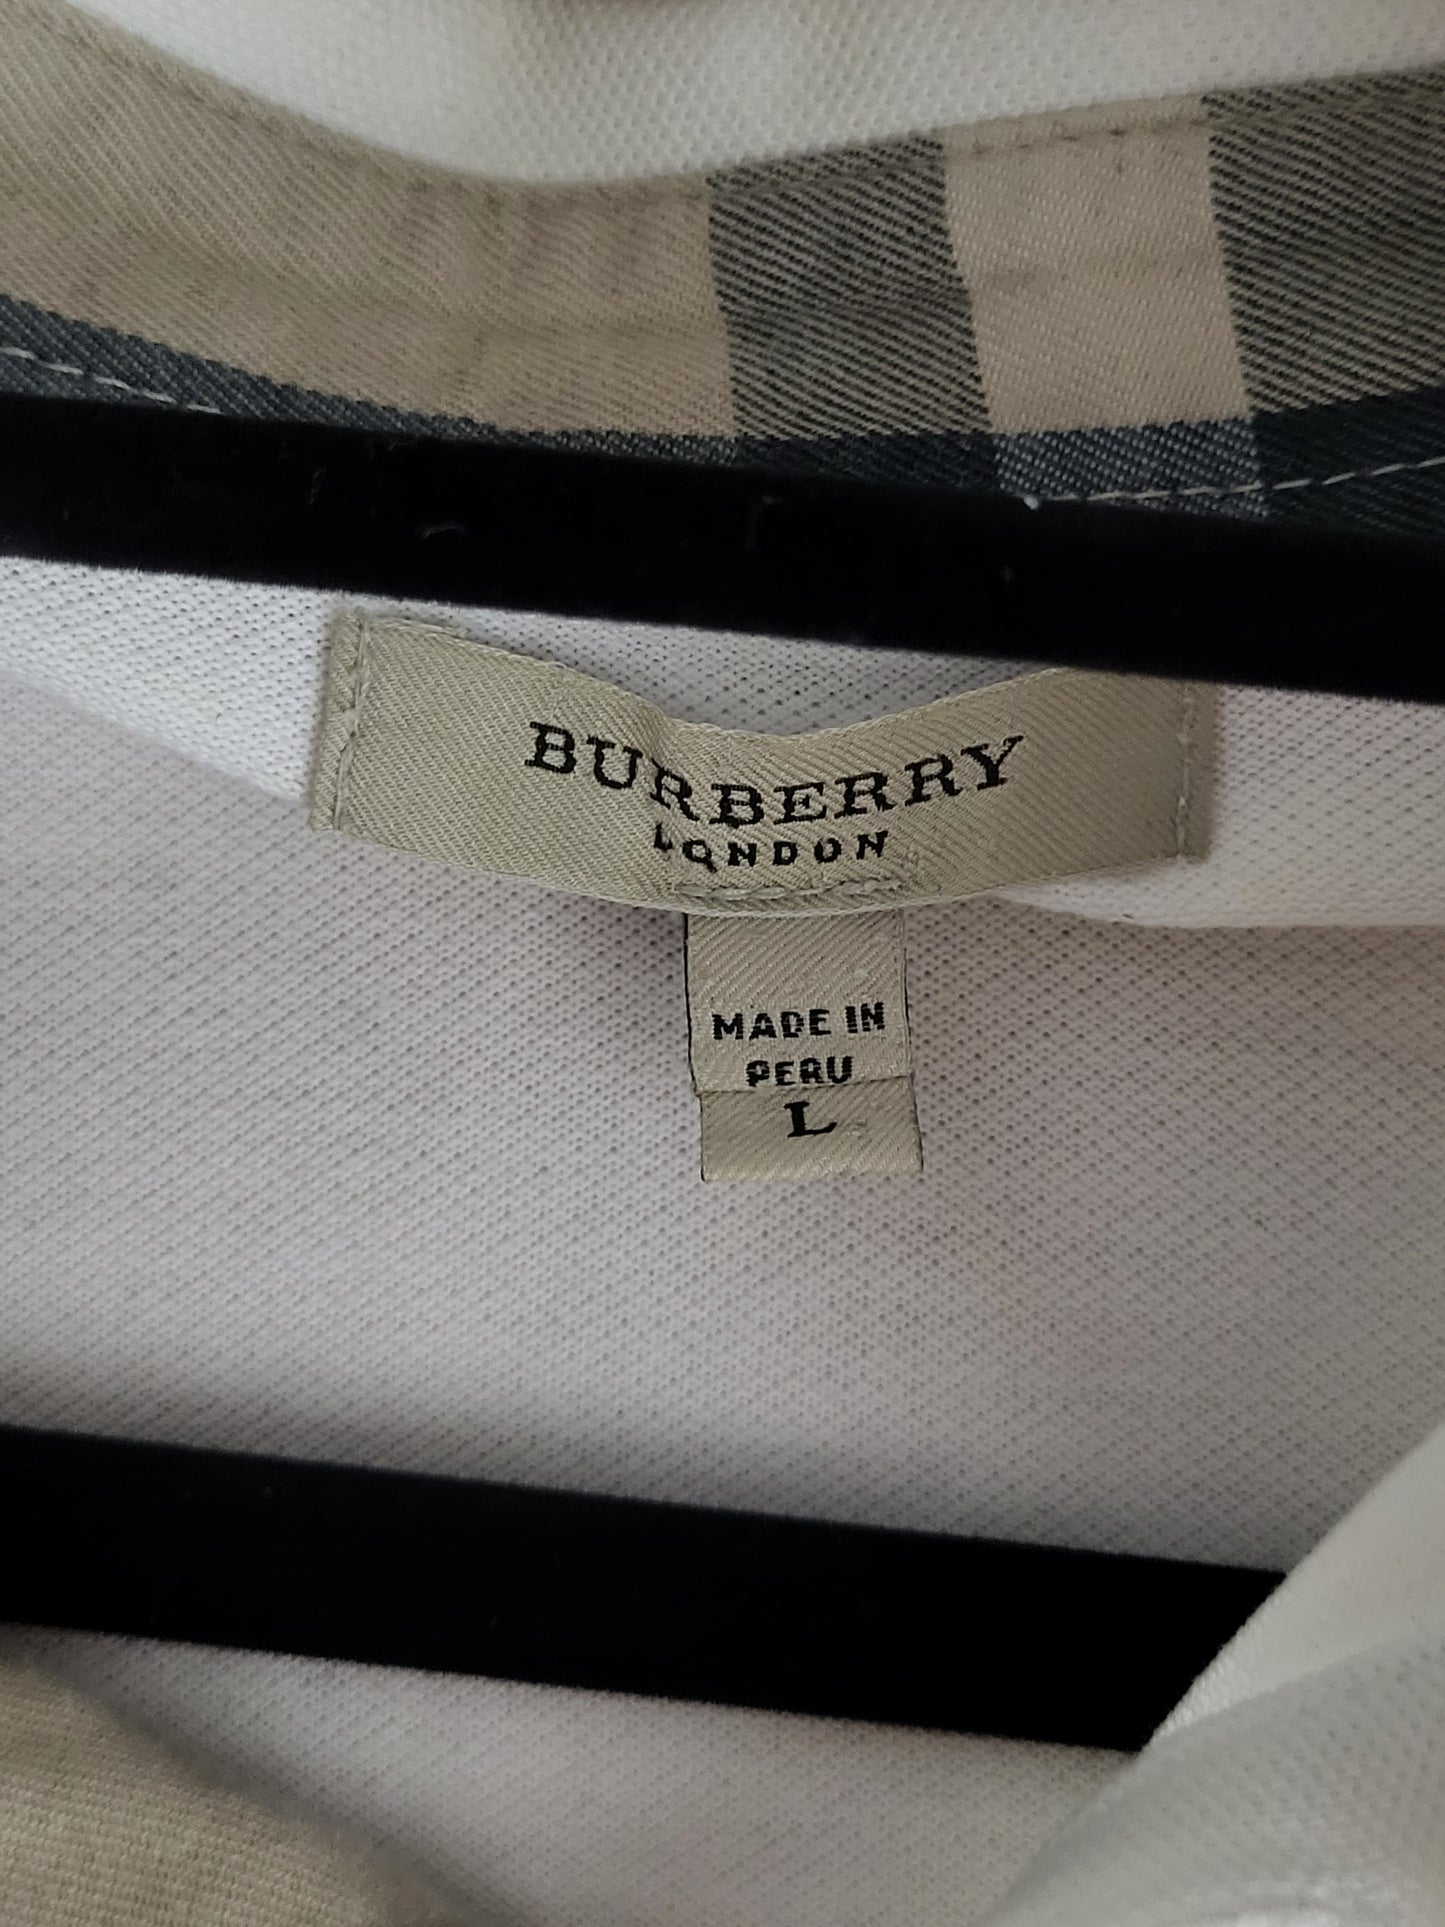 BURBERRY - Poloshirt - Klassisch - Weiß - Herren - L